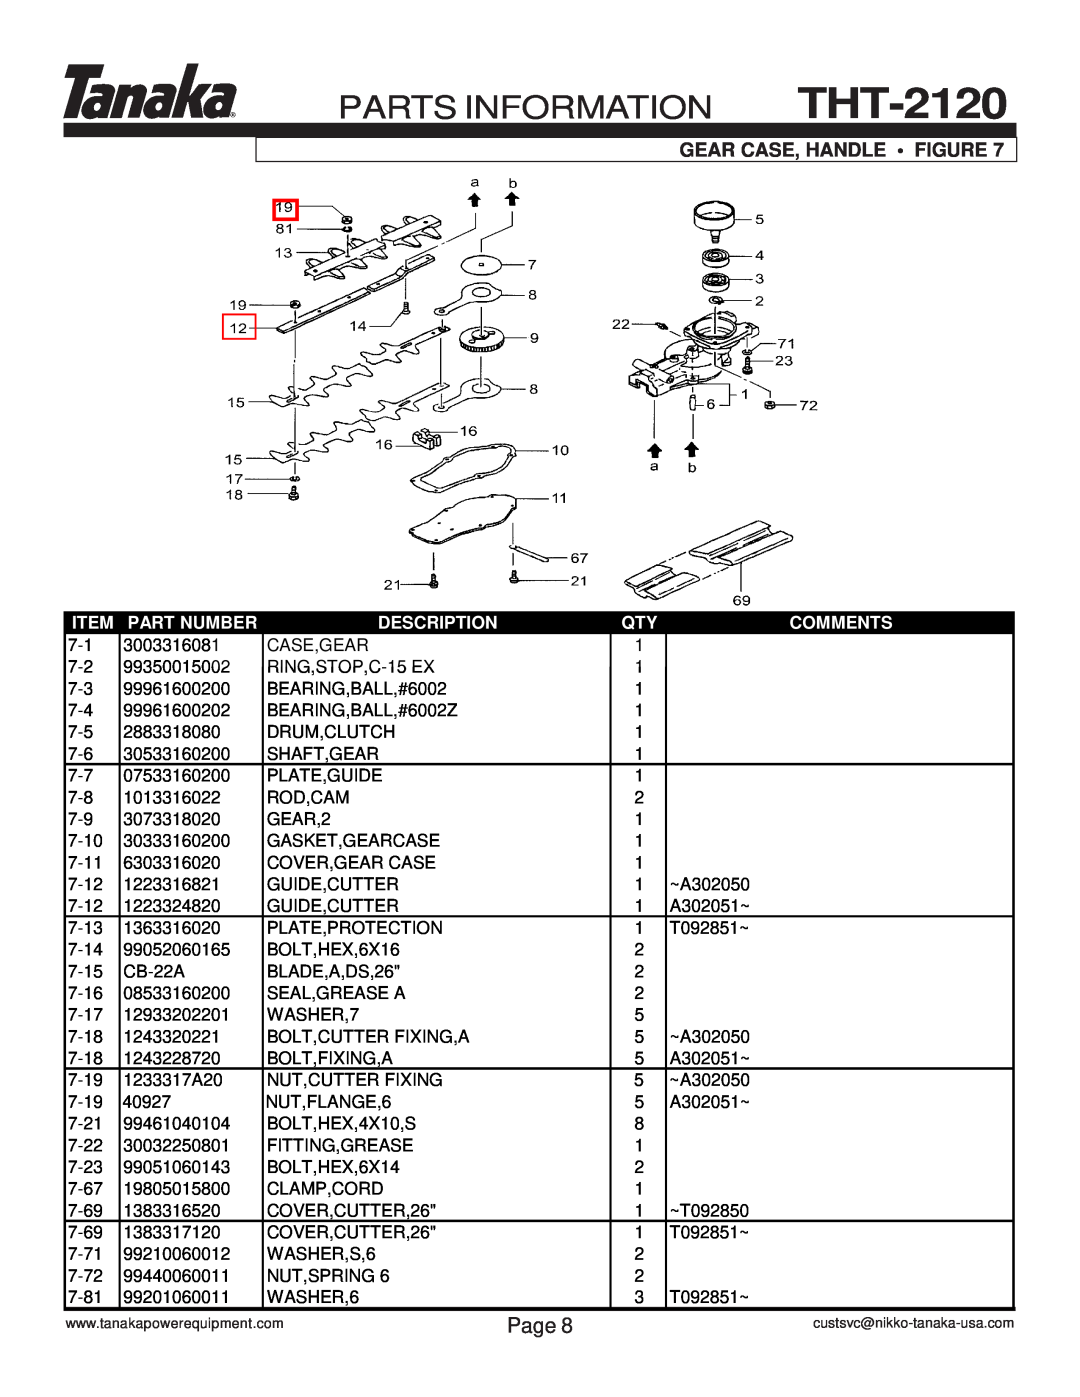 Tanaka manual PARTS INFORMATION THT-2120, Gear Case, Handle Figure, Page, Part Number, Description, Comments 